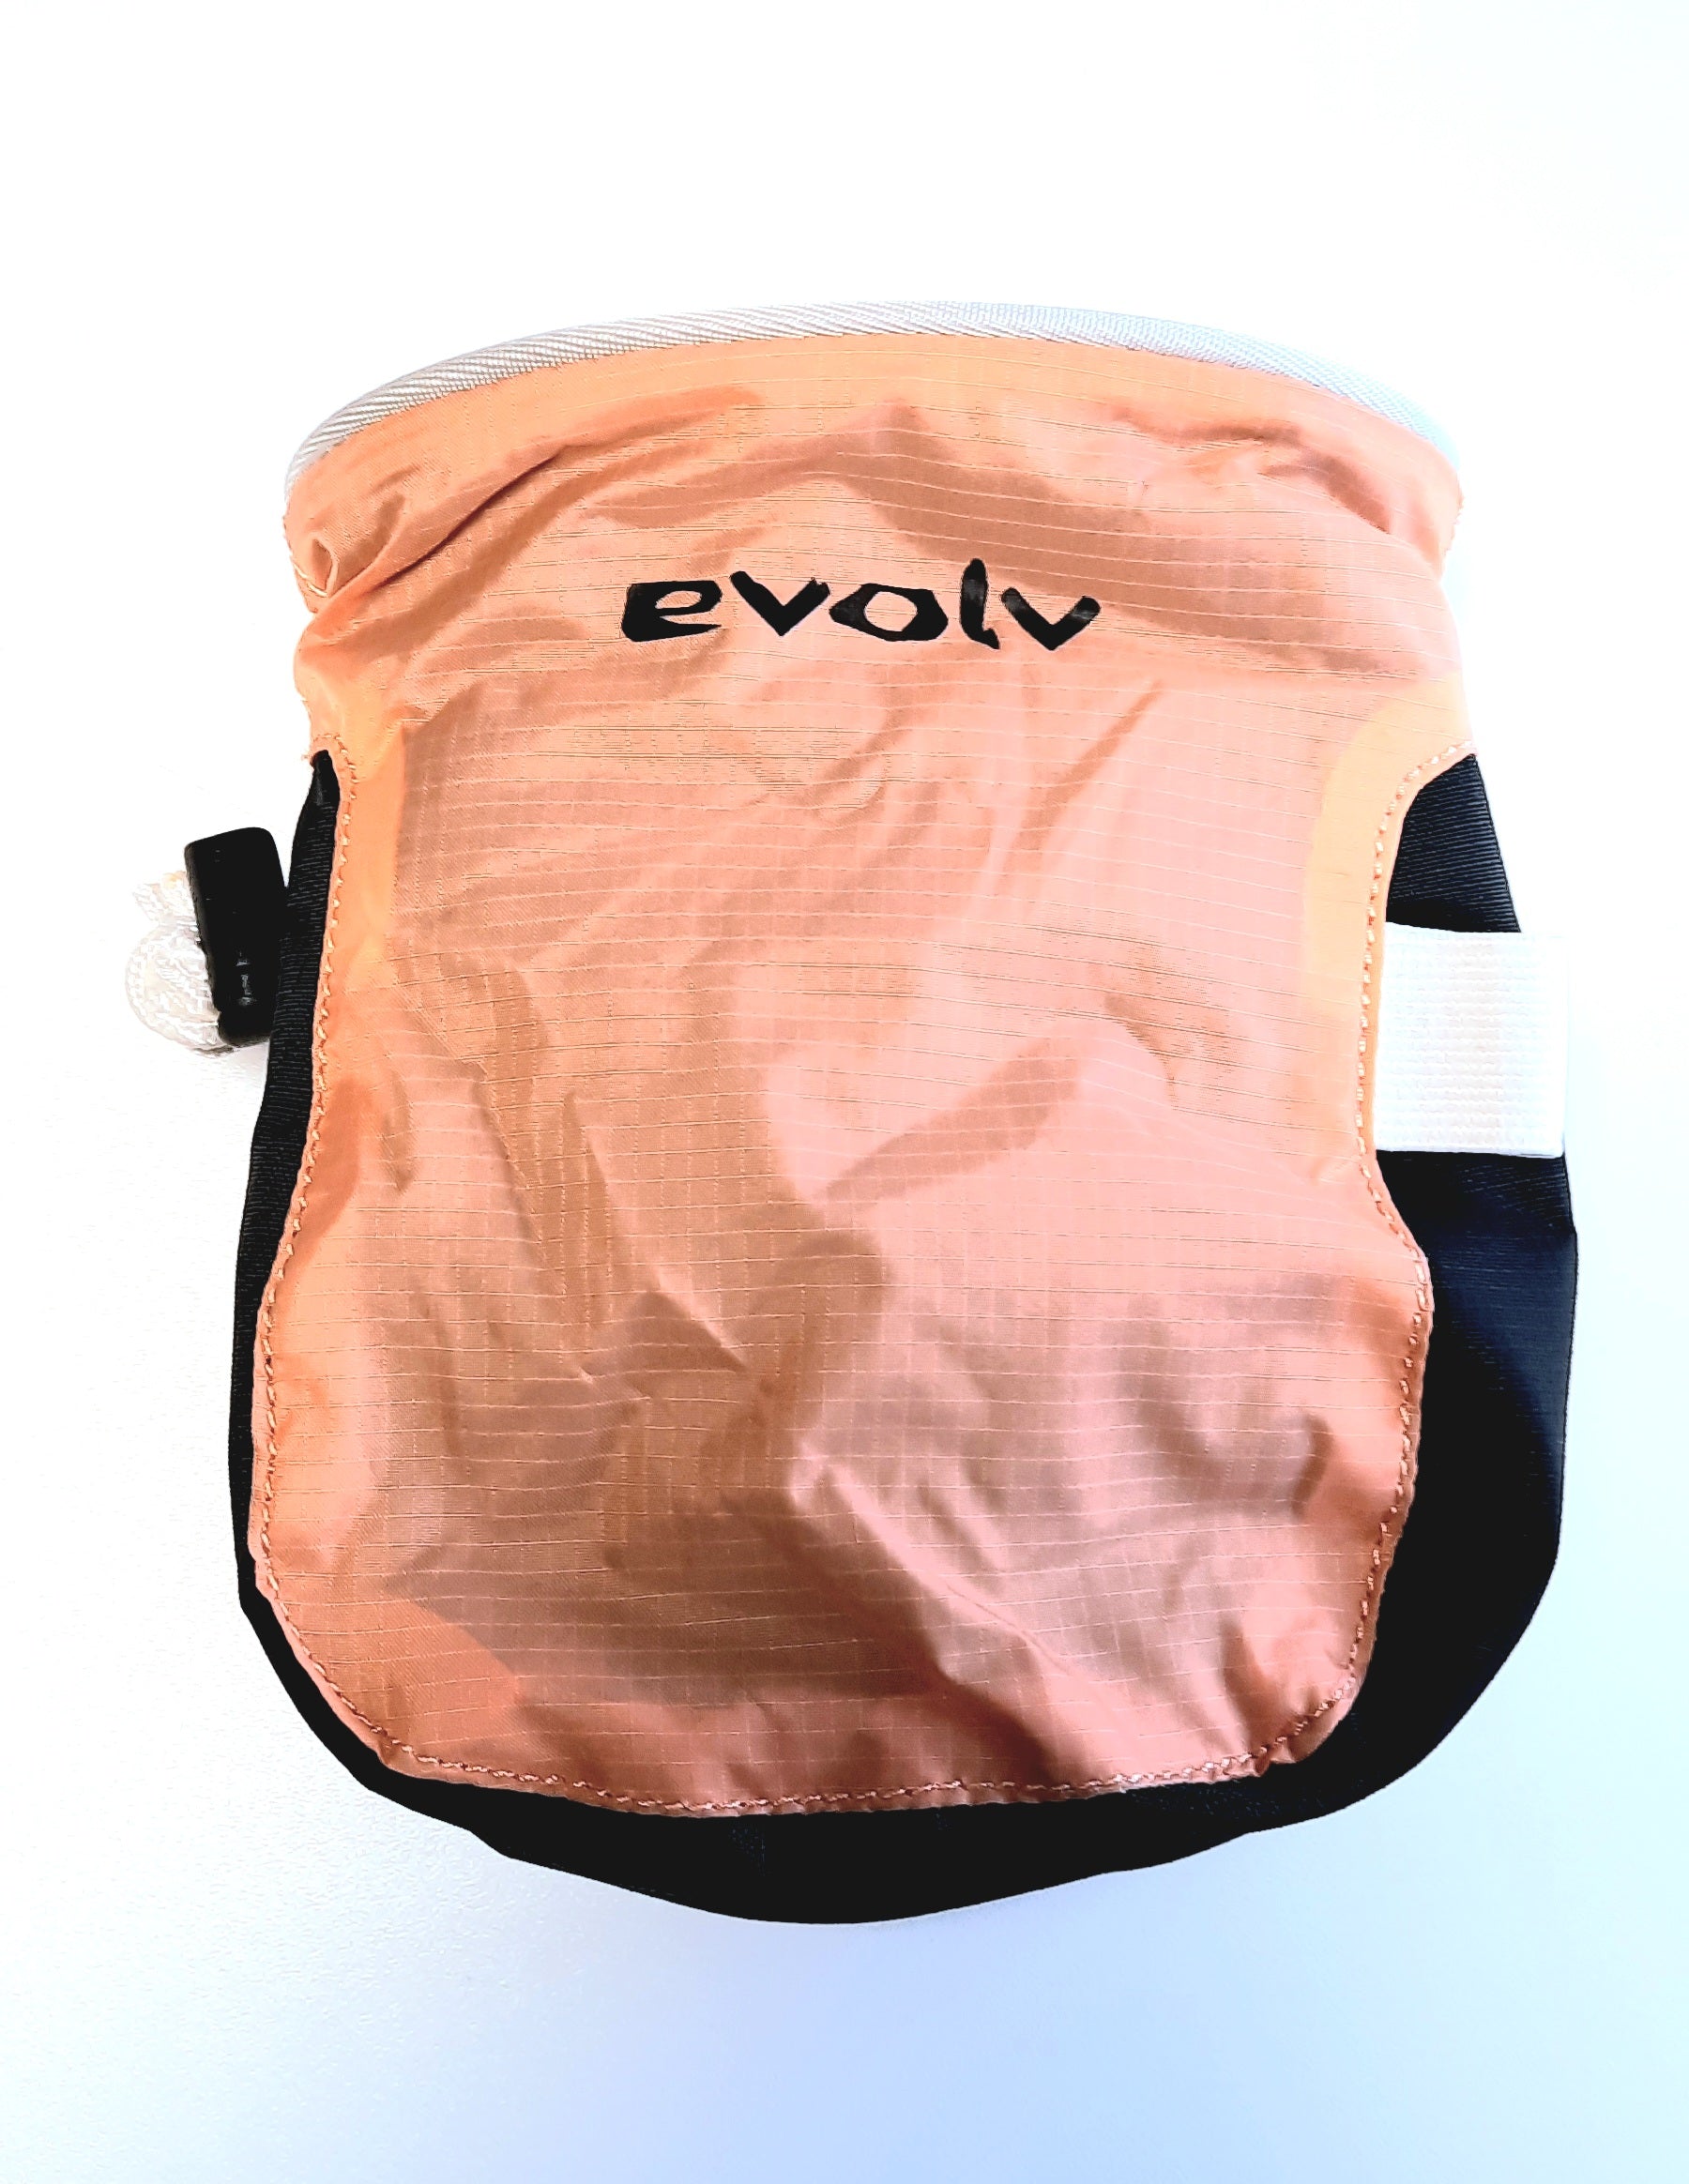 EVOLV Superlight Chalk Bag